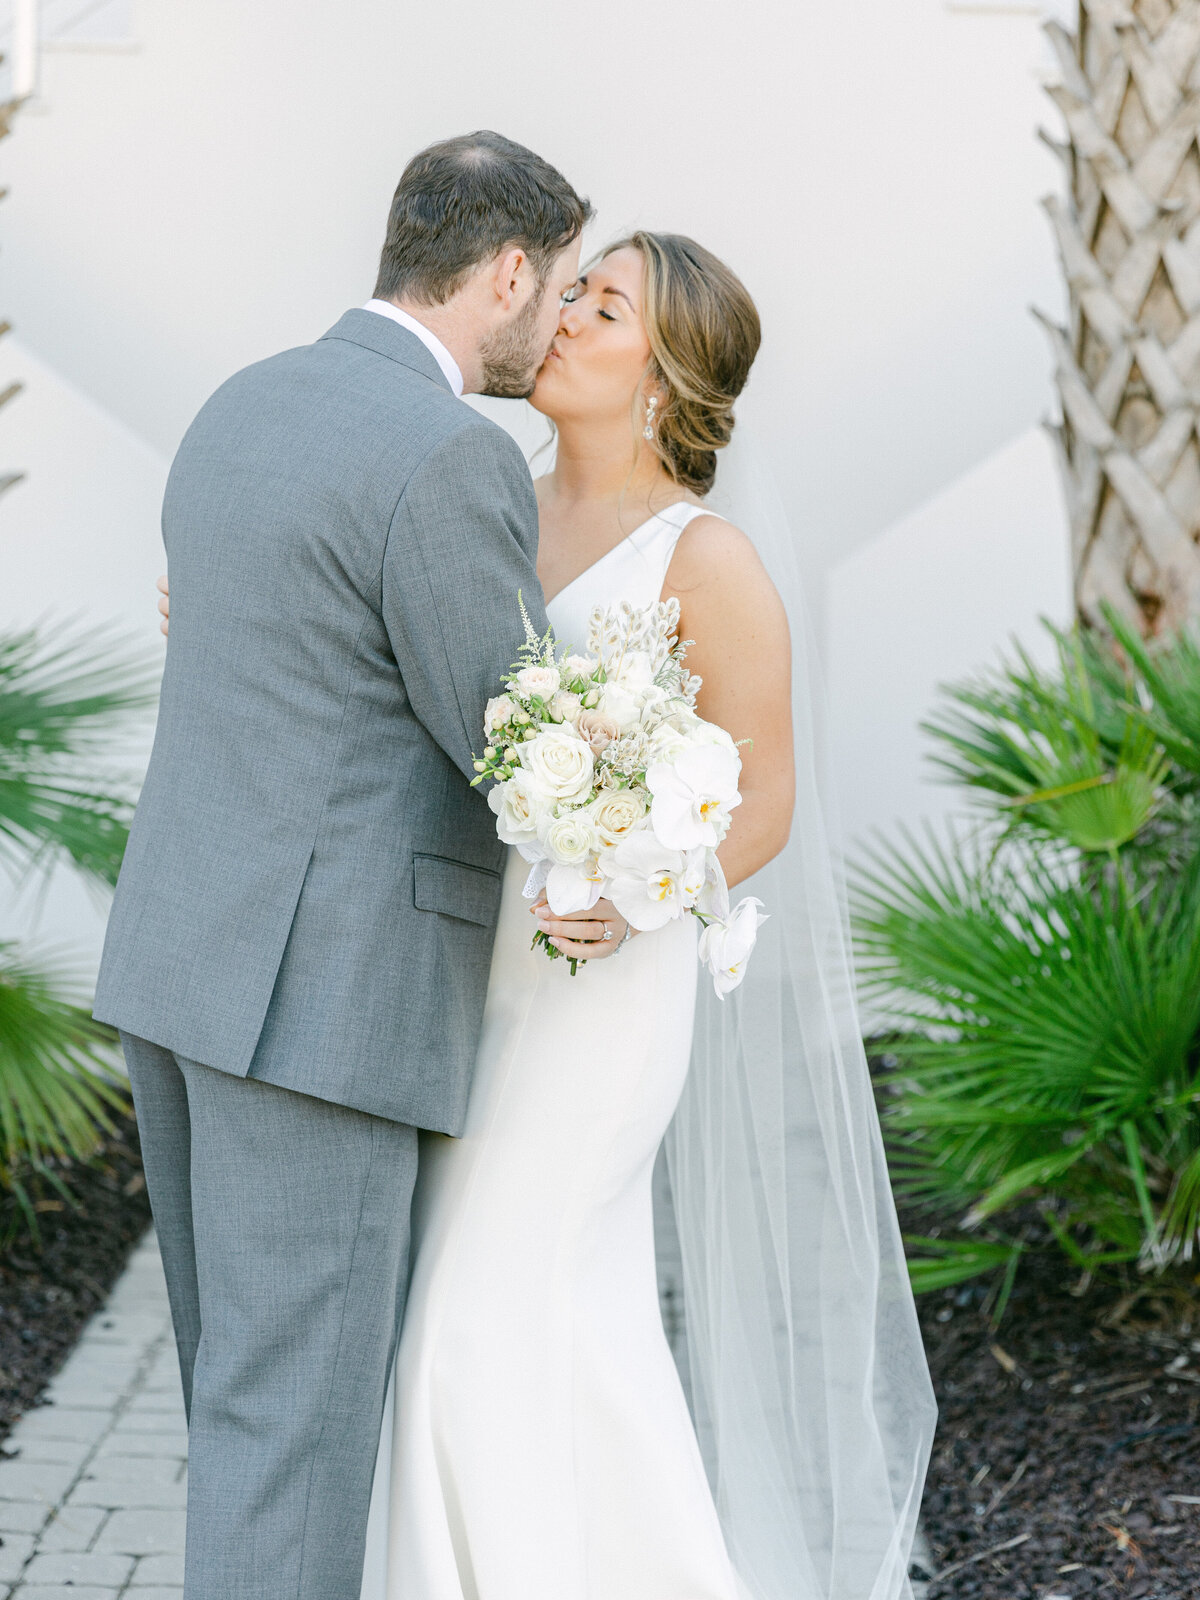 Marybeth and Ryan - Destin Florida Wedding Photographer - Darian Reilly Photography-41